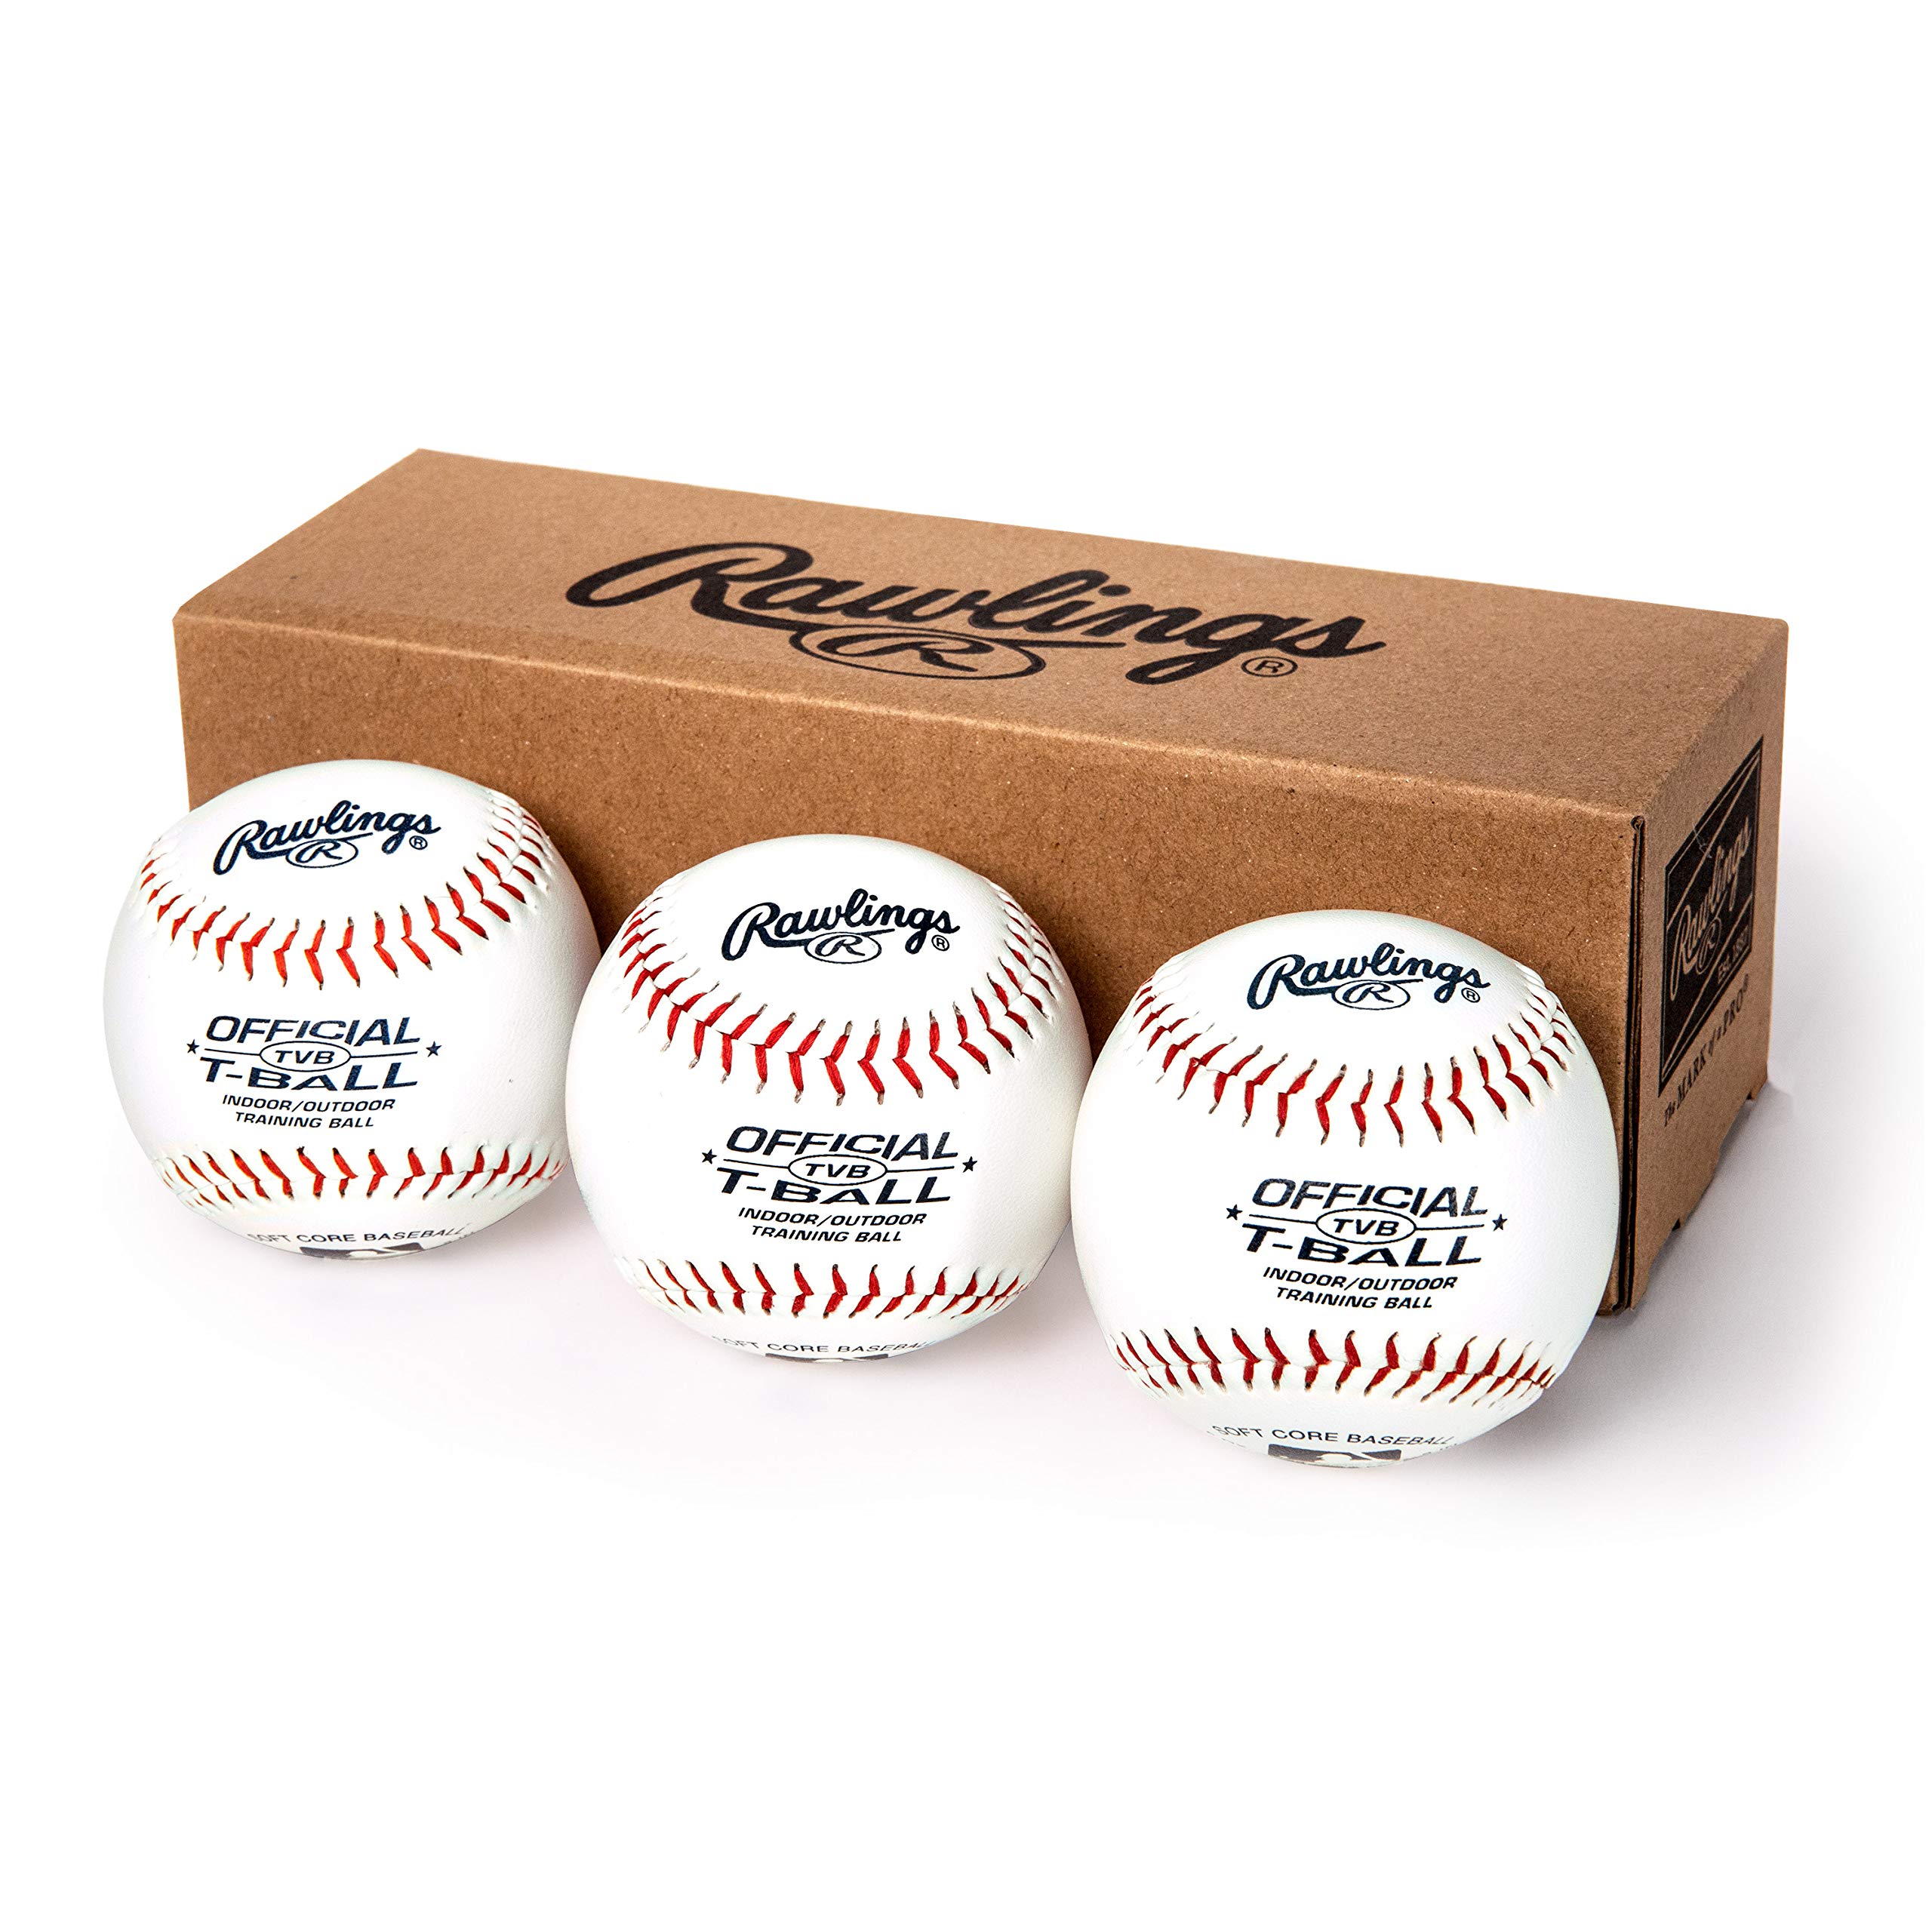 Rawlings T Balls Off Box mit 3 Tball-Basebällen, weiß, Official Size